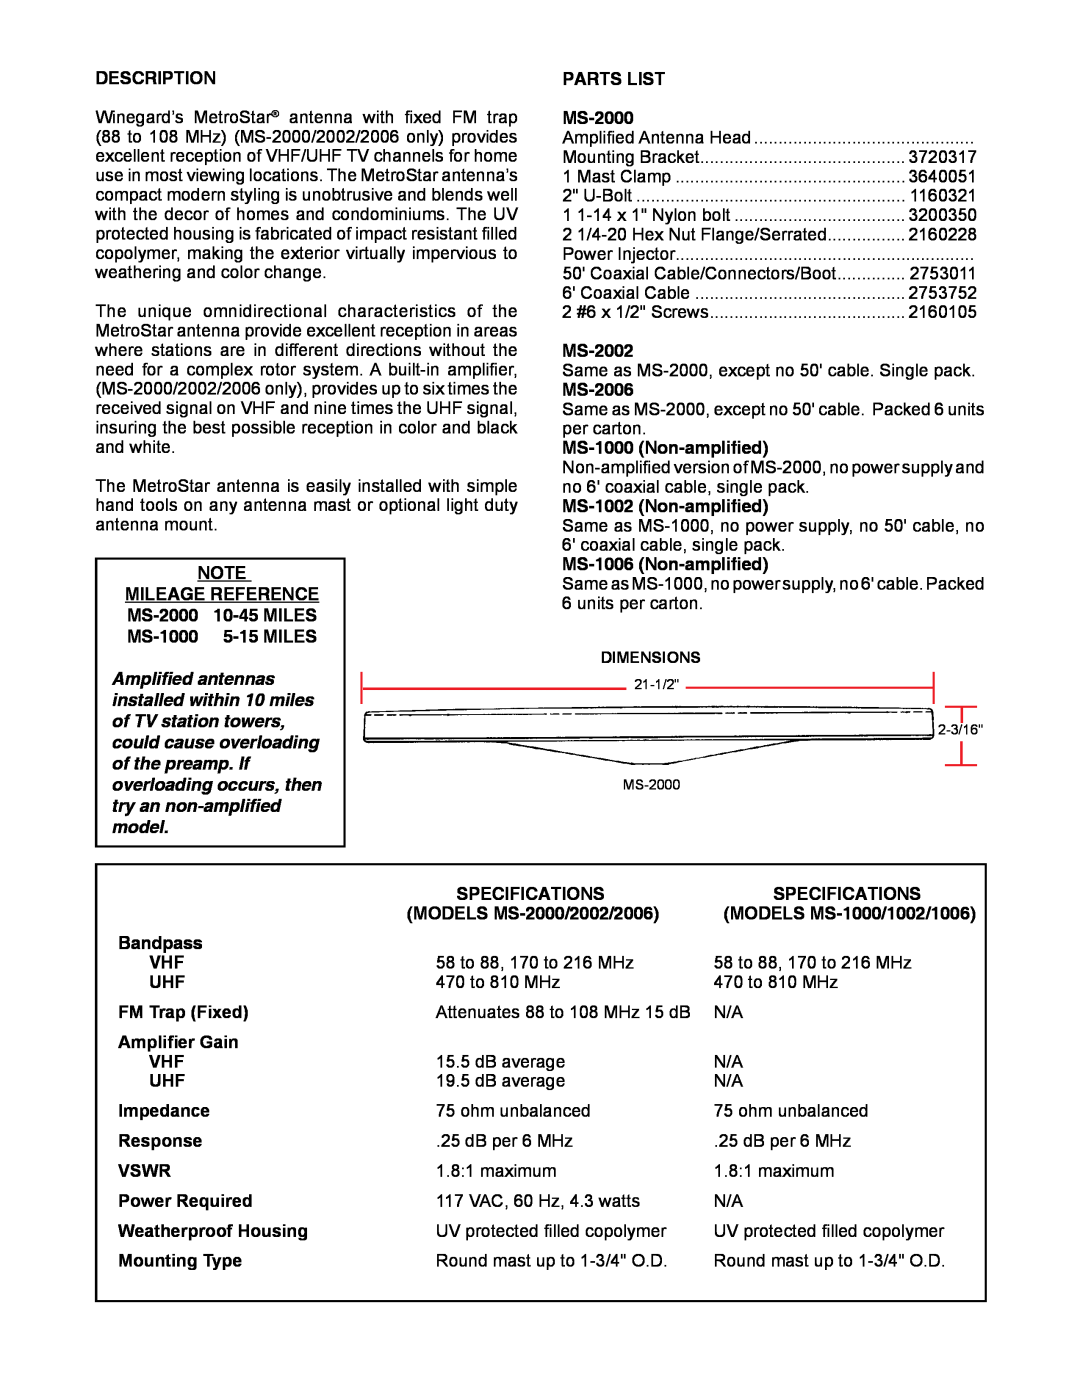 Winegard MS-2000 Description, Parts List, MS-2002, MS-2006, MS-1000 Non-amplified, MS-1002 Non-amplified, Miles, Bandpass 